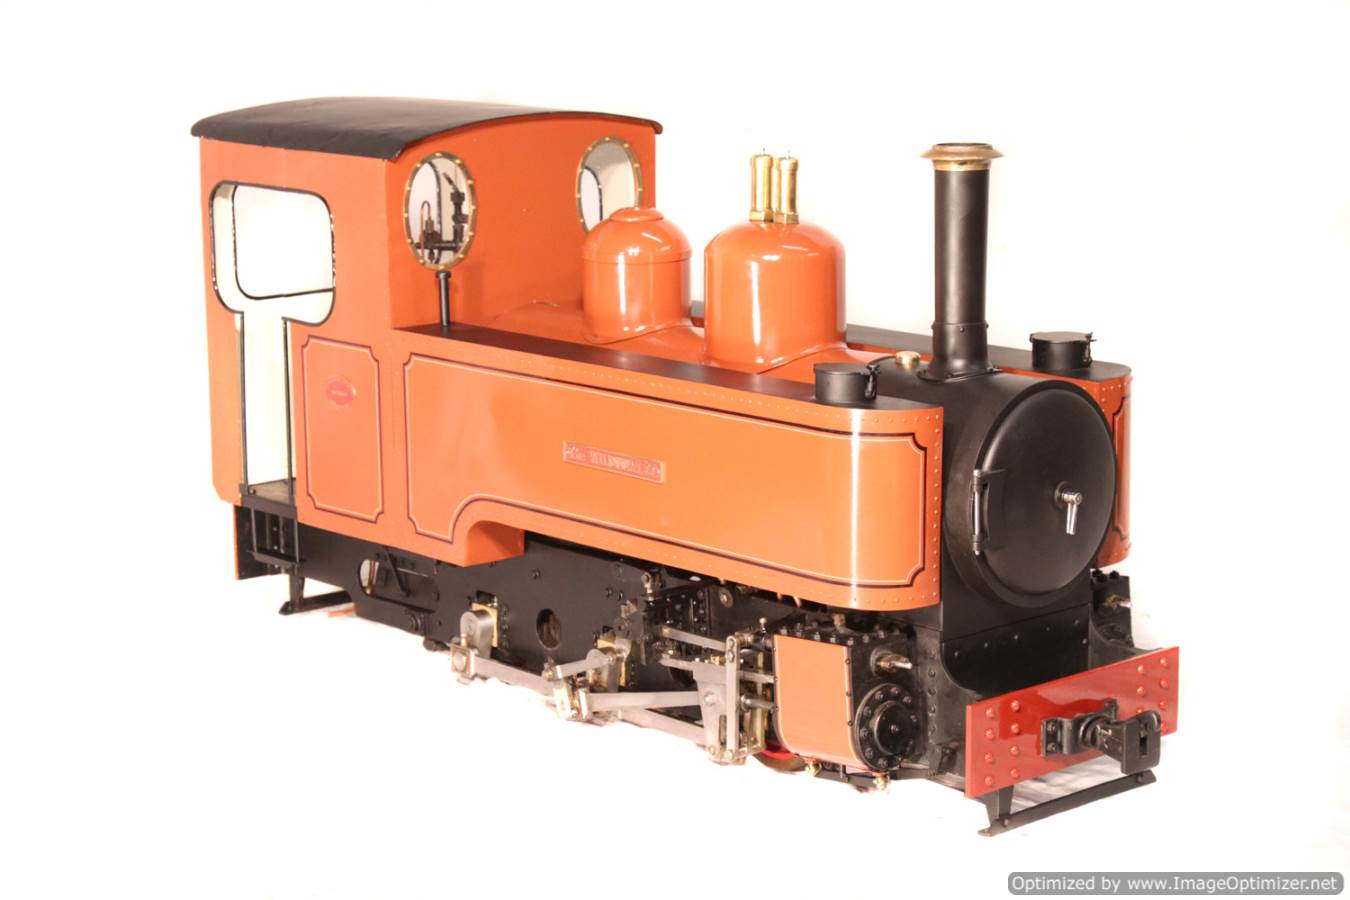 test 5 inch Gauge Fowler Live Steam Locomotive for sale 21 Optimized